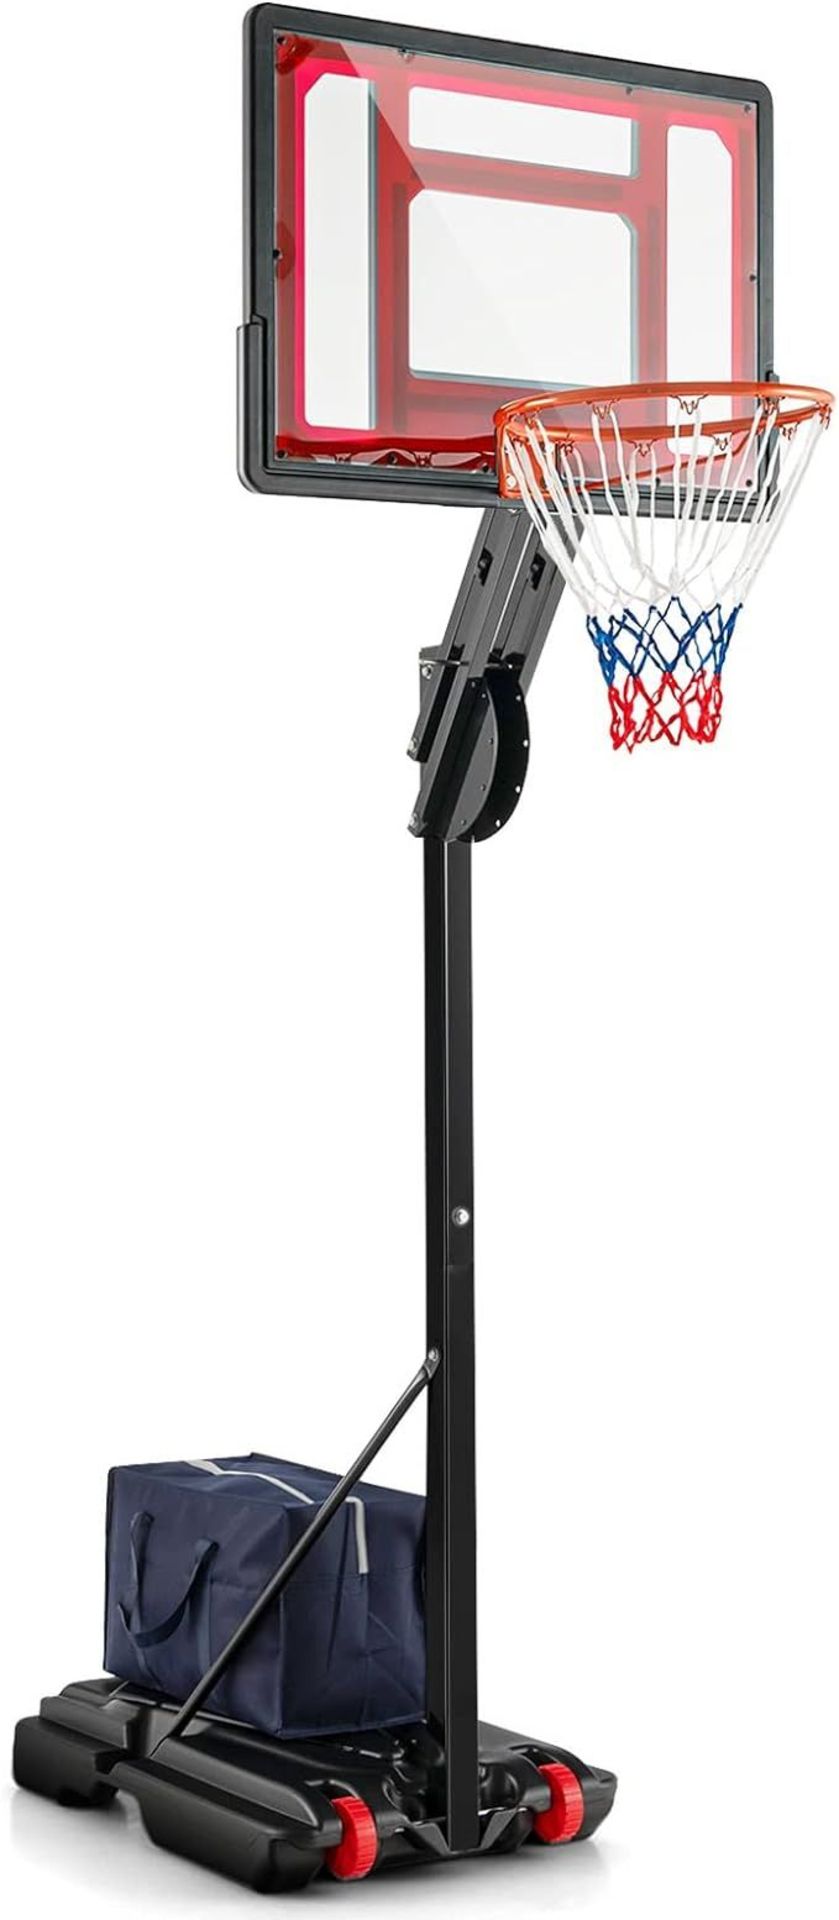 dDeluxe 10ft Basketball Backboard Hoop Net Set, 1.55M-3.1M Height Adjustable Basketball Stand with